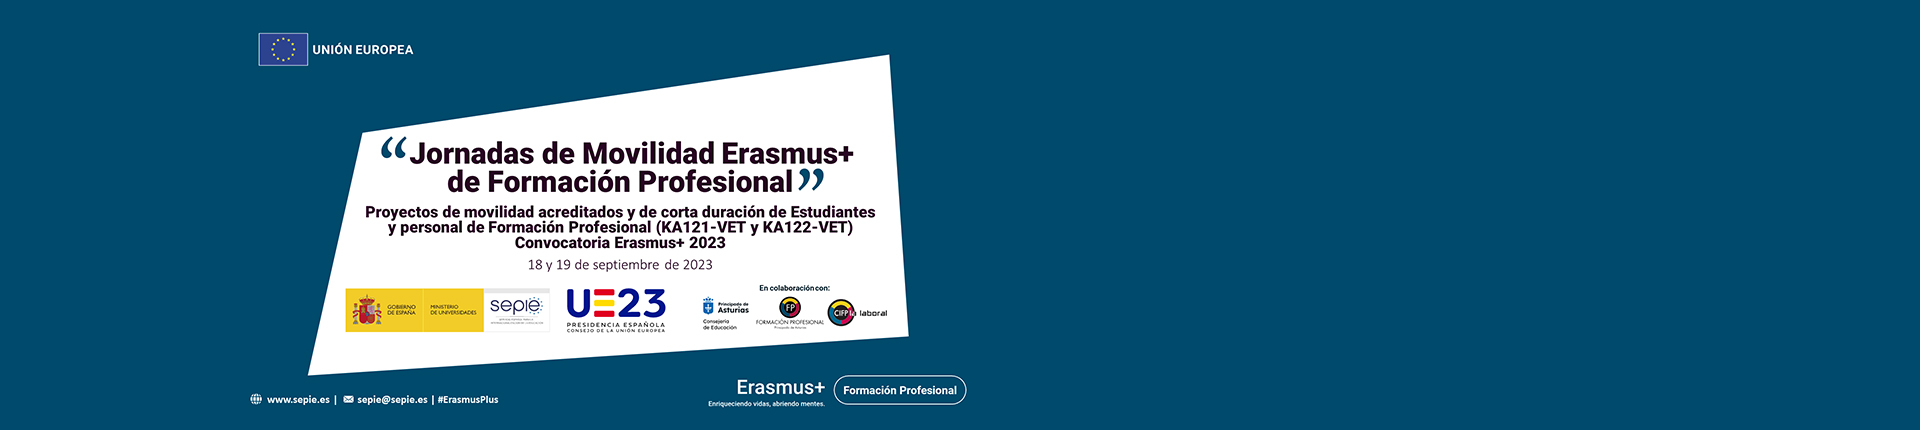 Jornadas Erasmus+ KA121-VET y KA122-VET 2023